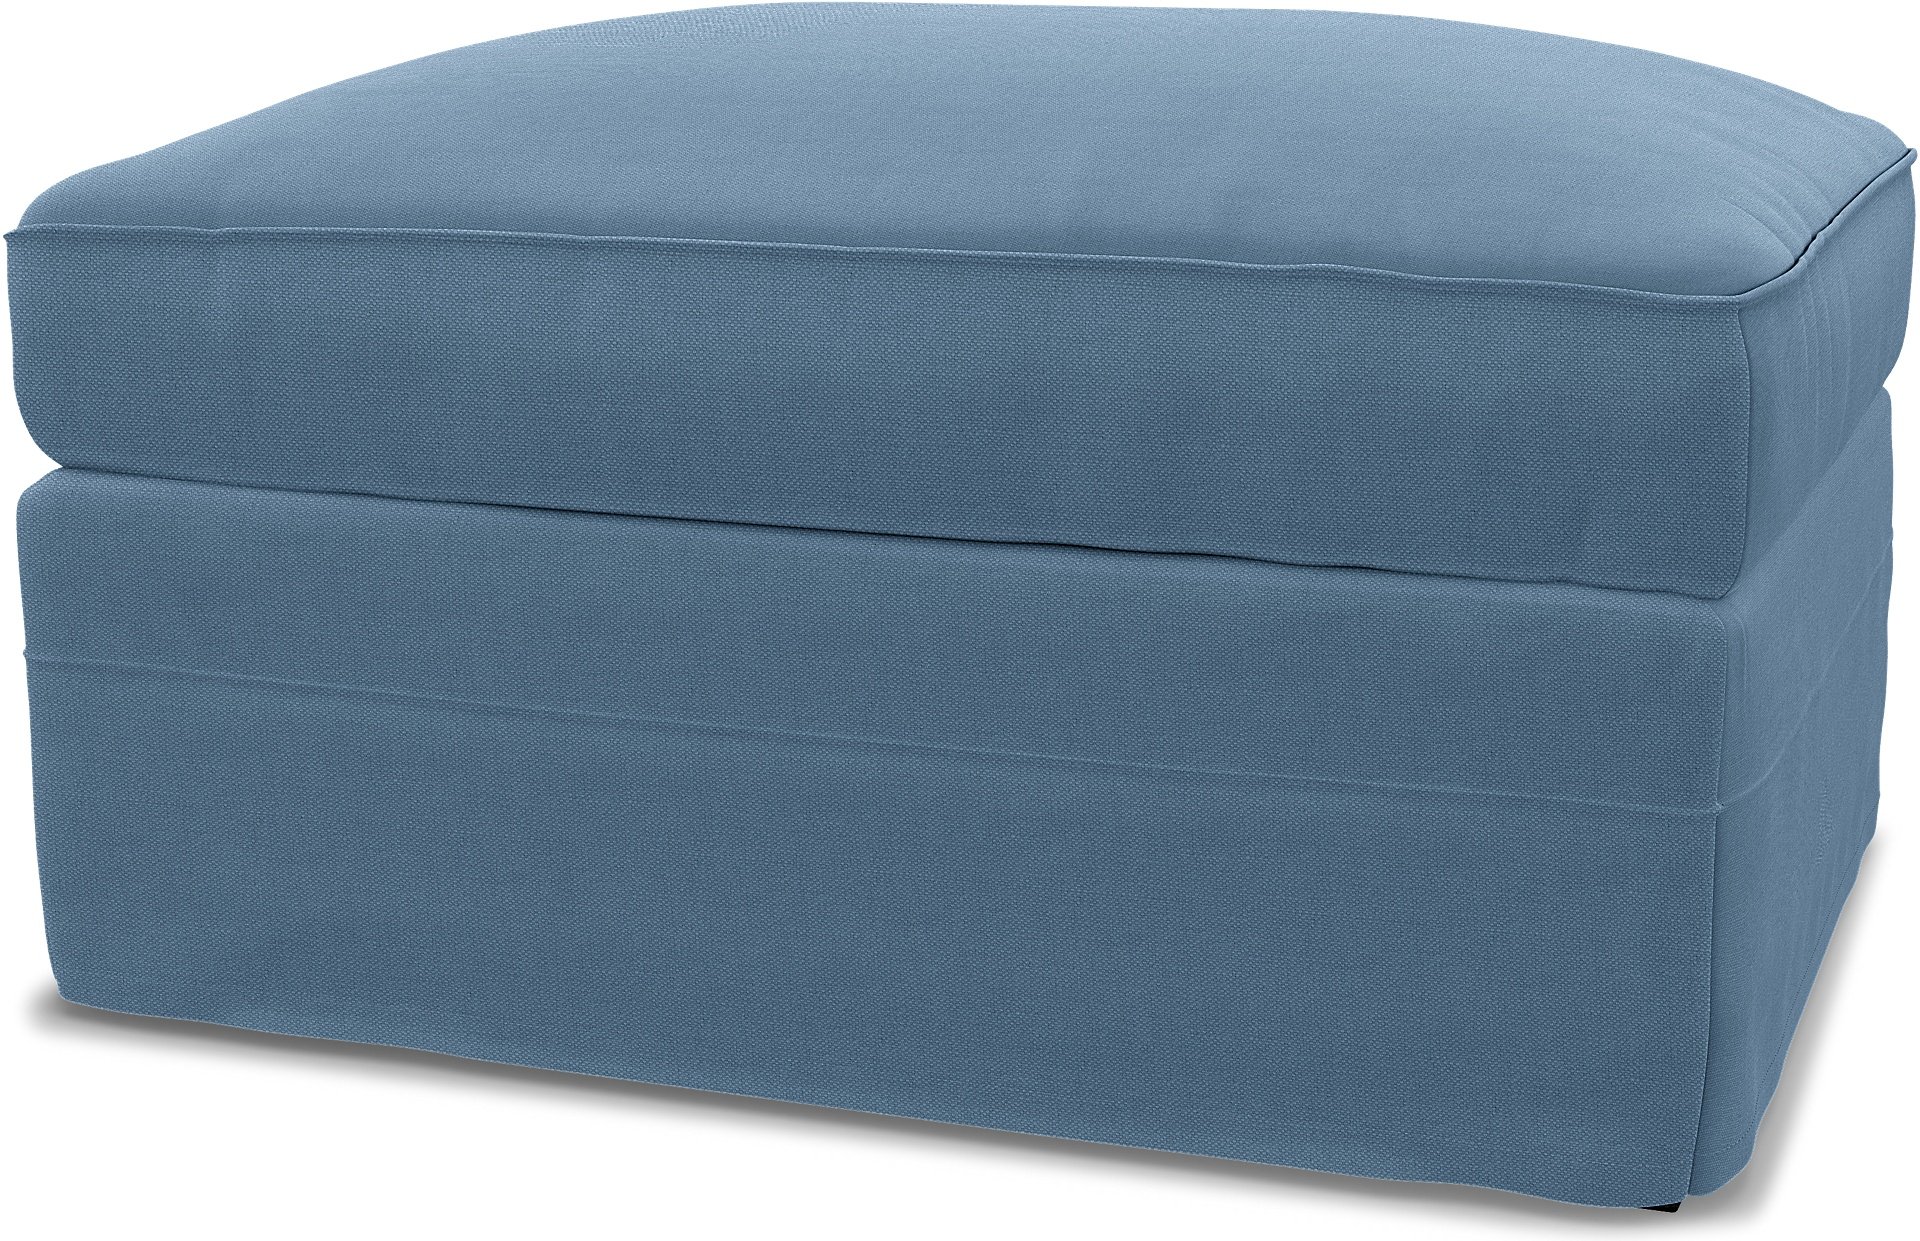 IKEA - Gronlid Footstool with Storage Cover, Vintage Blue, Linen - Bemz